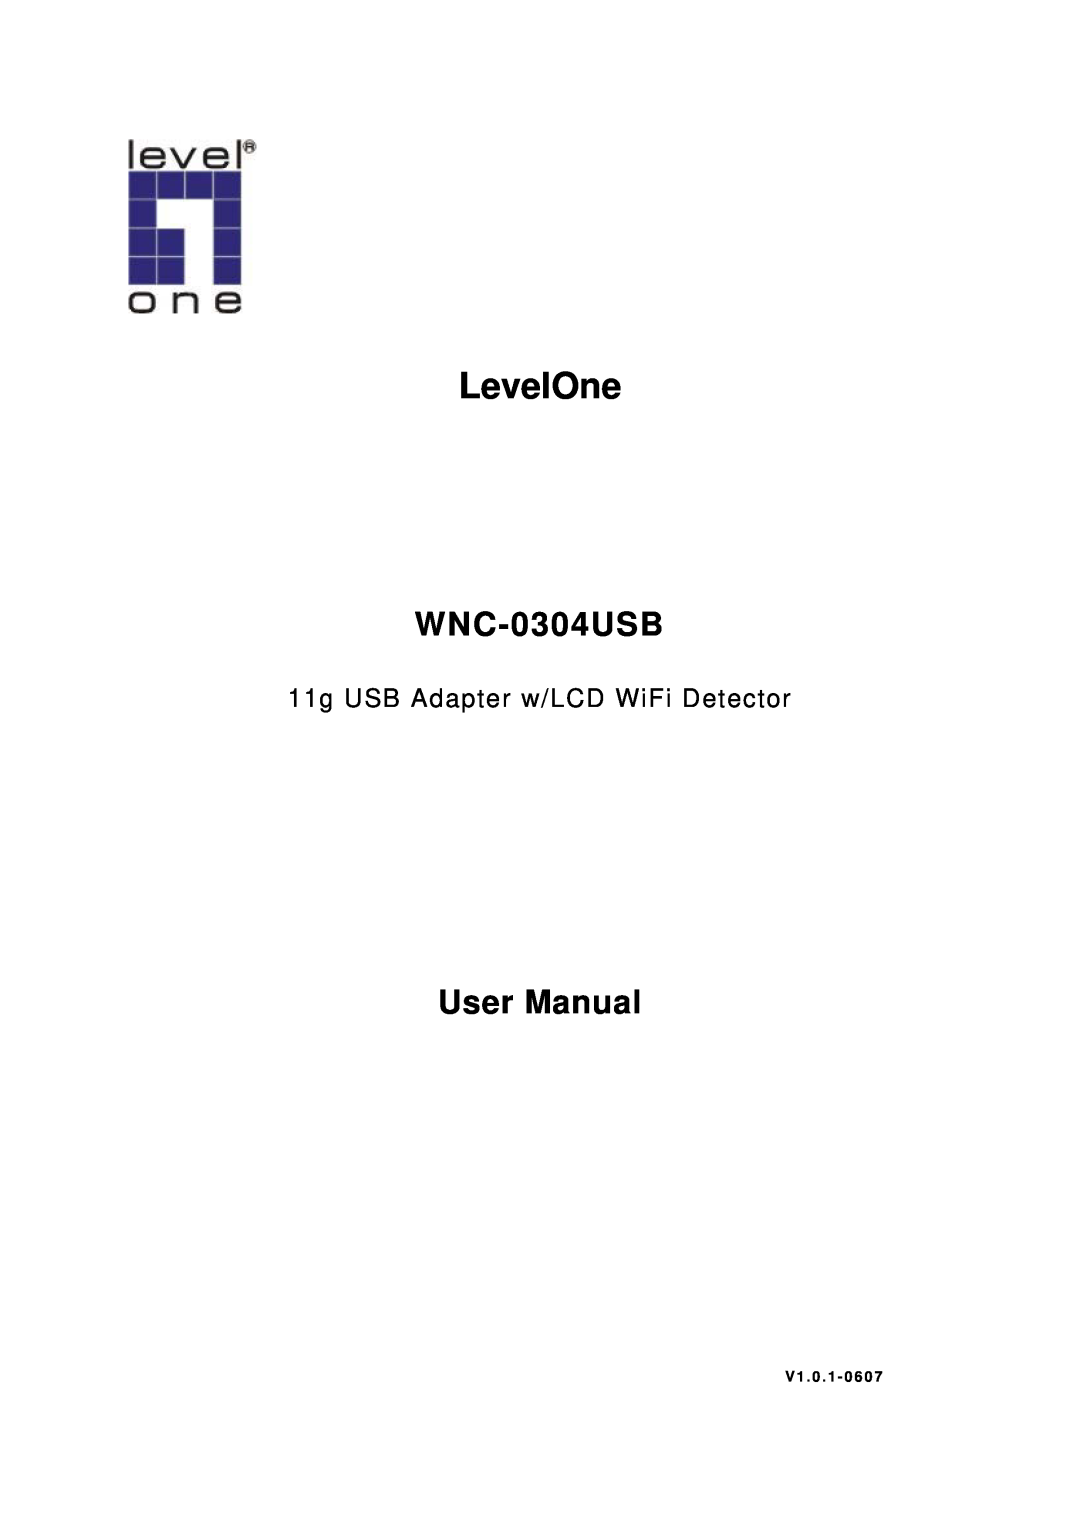 LevelOne 11g USB Adapter w/LCD WiFi Detector user manual WNC-0304USB, User Manual, LevelOne, V1 . 0 . 1 